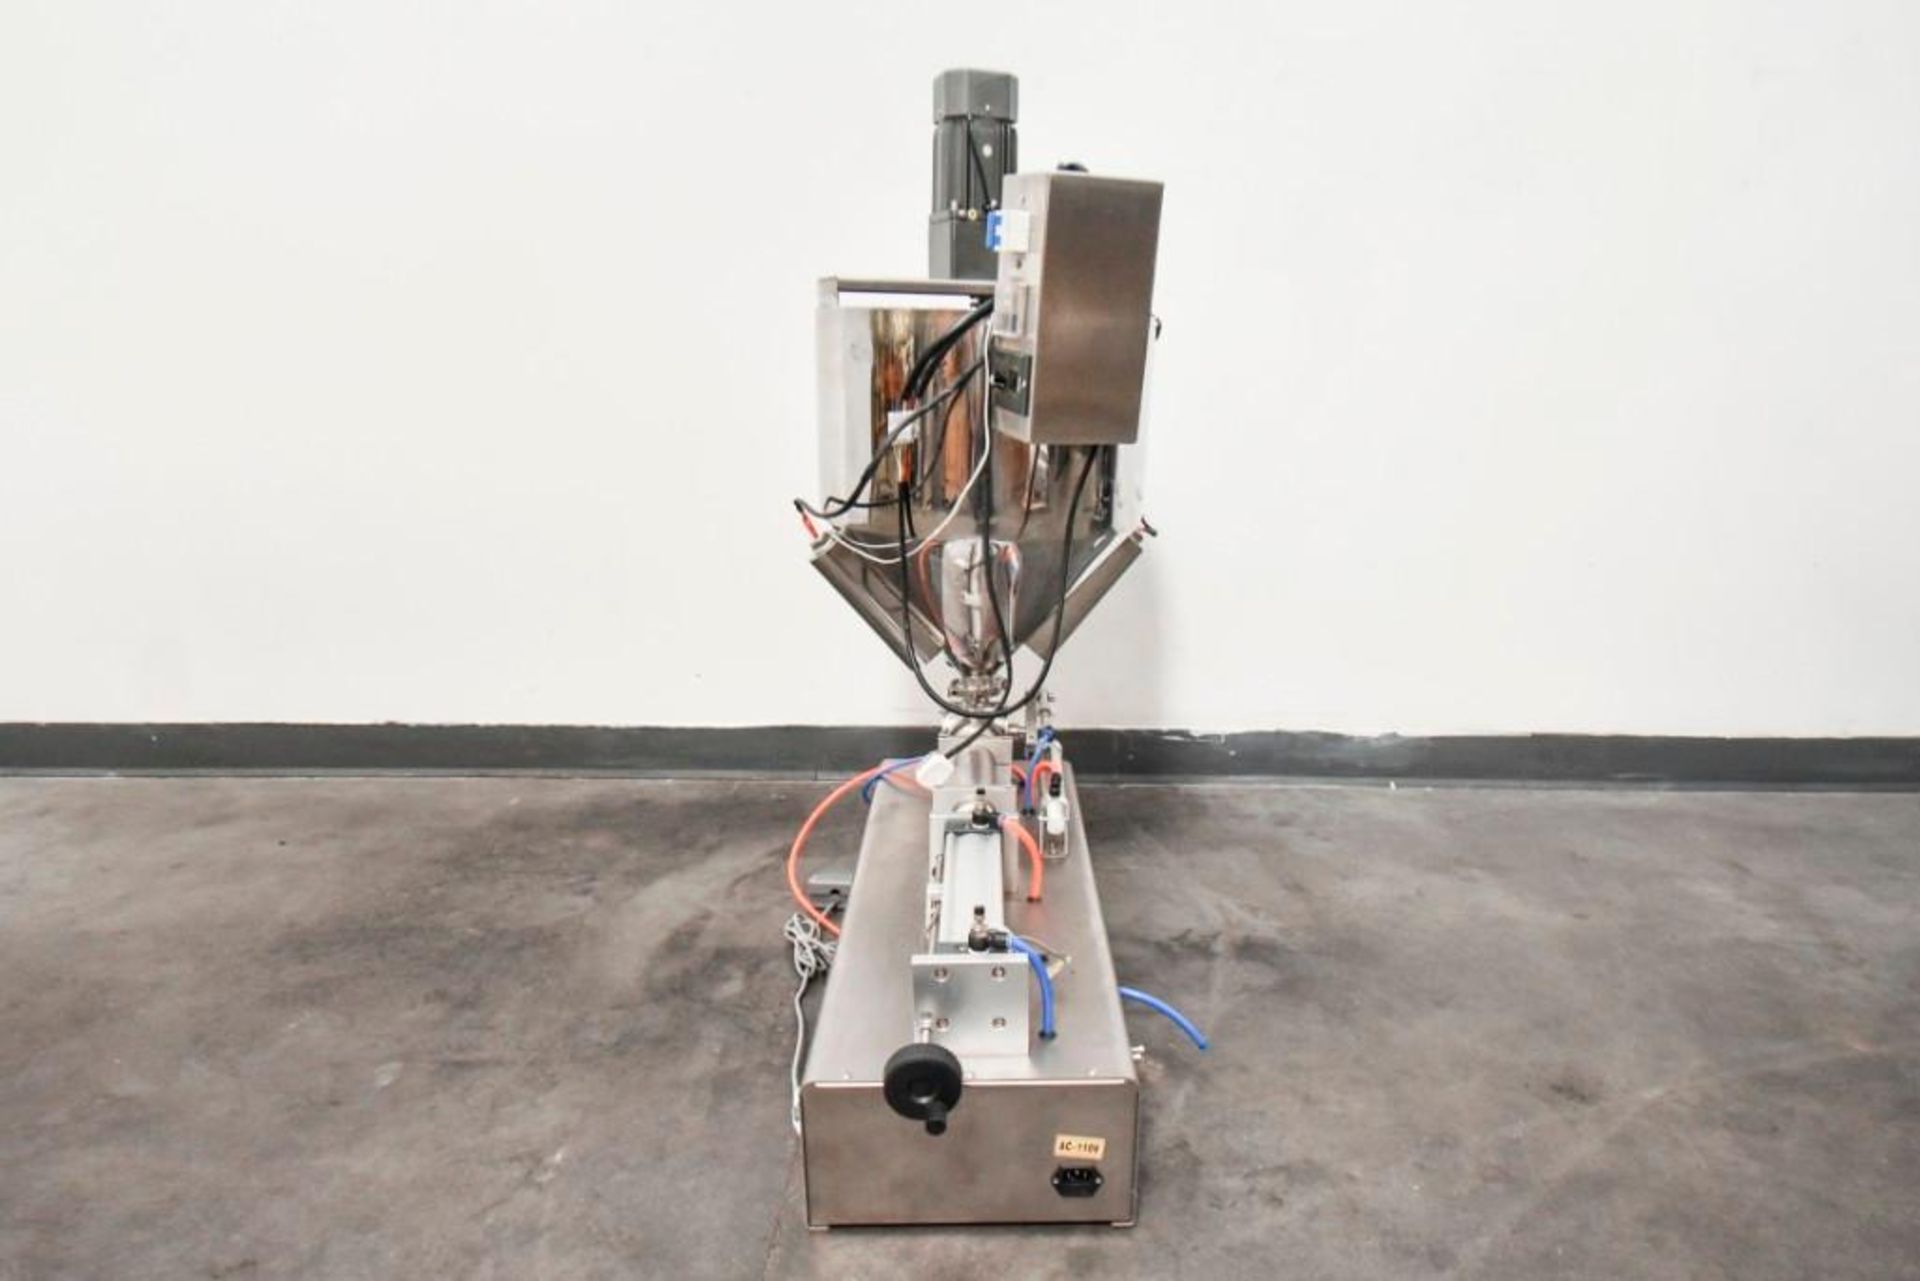 Quantitative Semi-Automatic Paste Liquid Filling Machine G1WG with Heated Hopper & Mixing Motor - Image 3 of 15